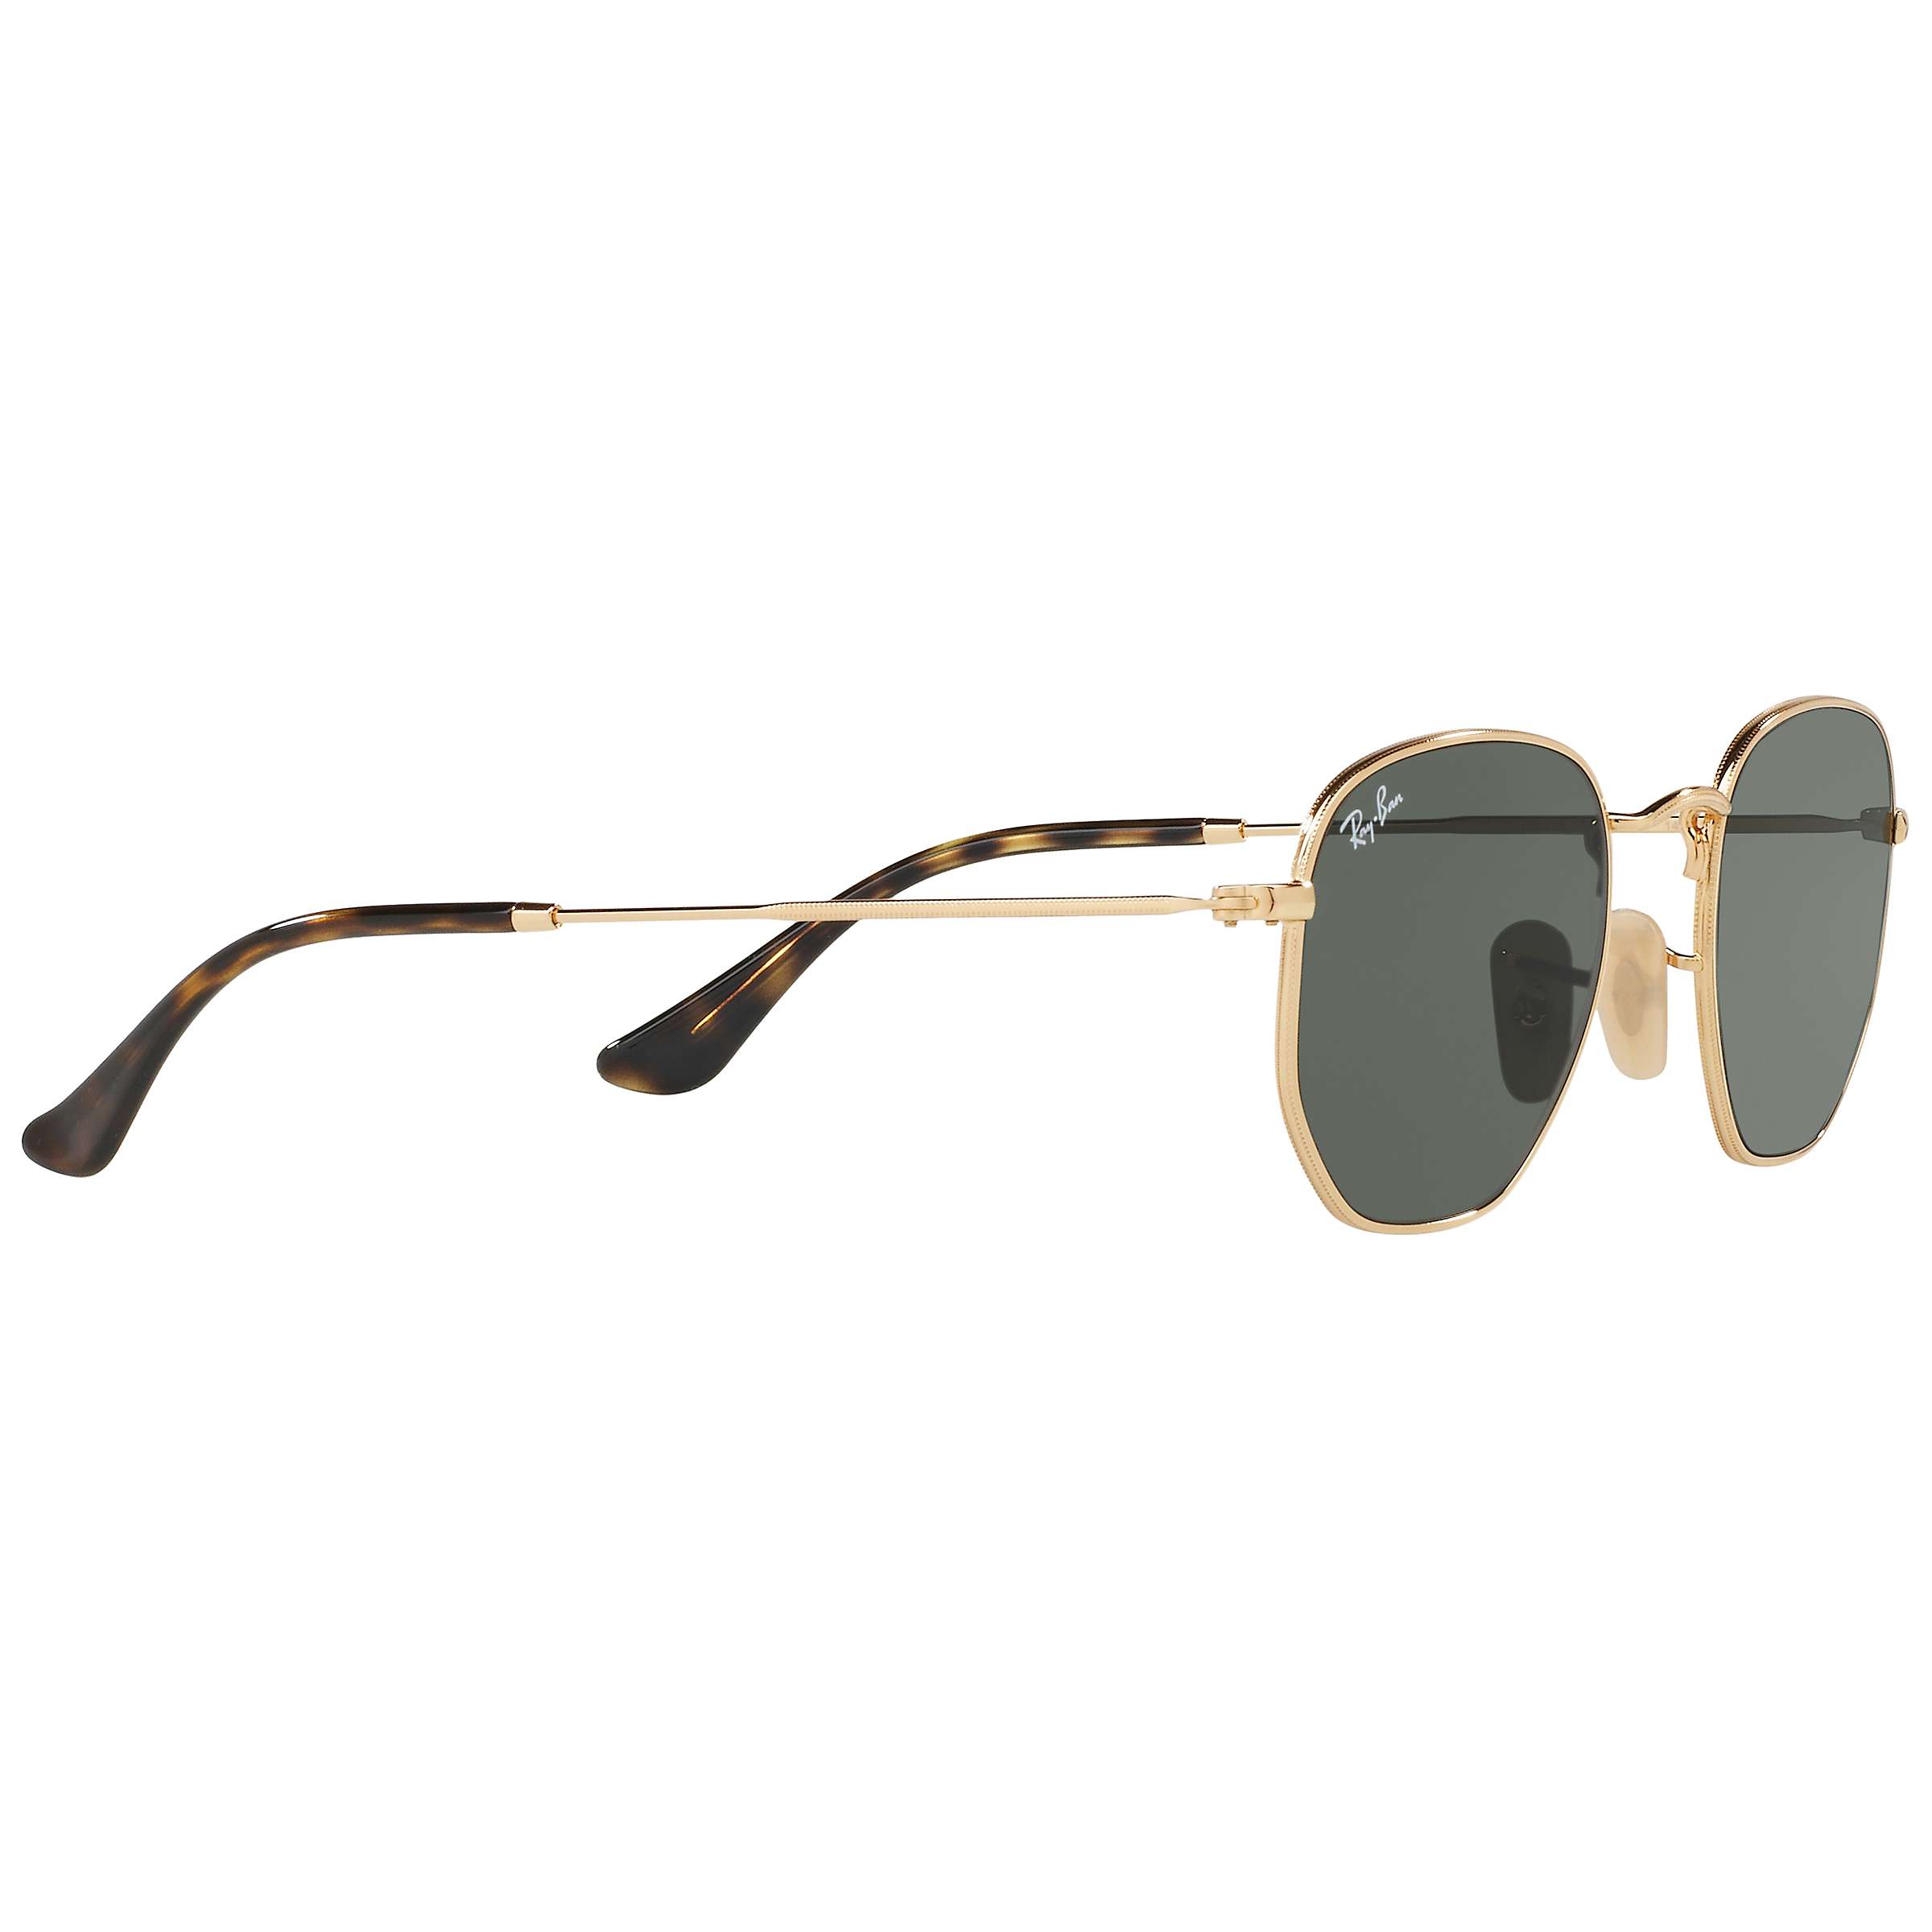 Buy Ray-Ban RB3548 Hexagonal Flat Lens Sunglasses Online at johnlewis.com